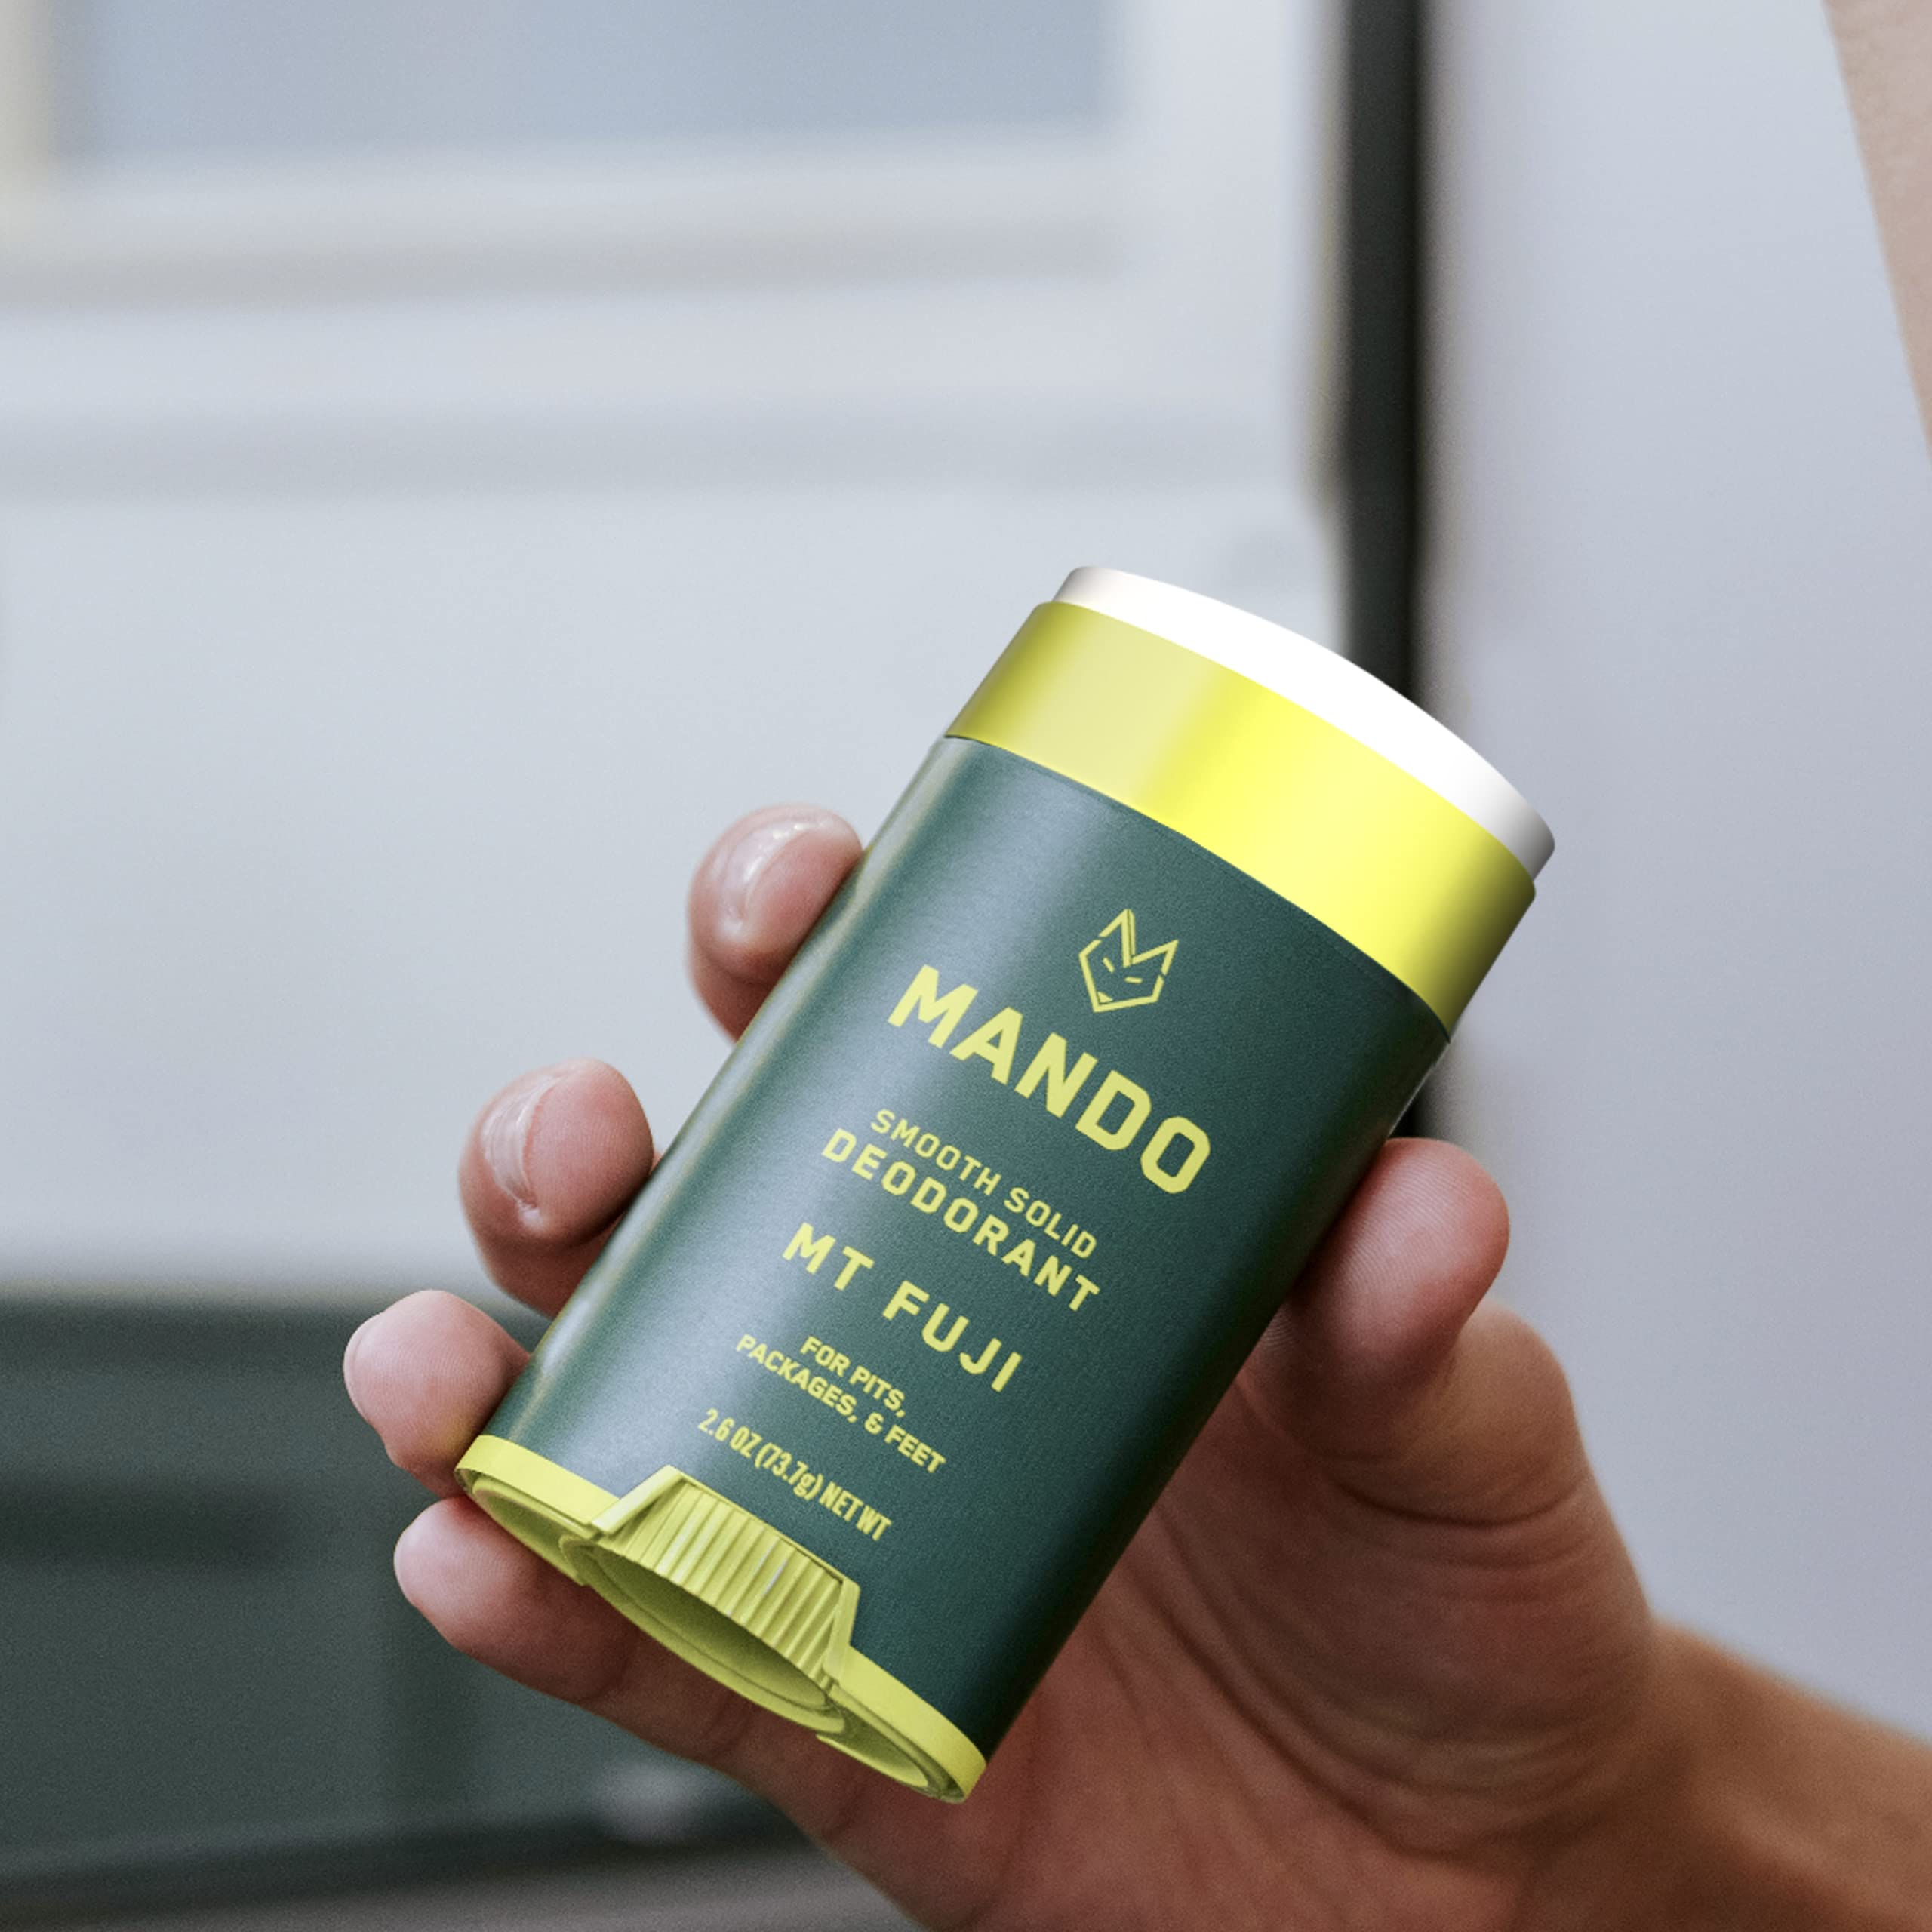 Mando Whole Body Deodorant For Men - Smooth Solid Stick - 72 Hour Odor Control - Aluminum Free, Baking Soda Free, Skin Safe - 2.